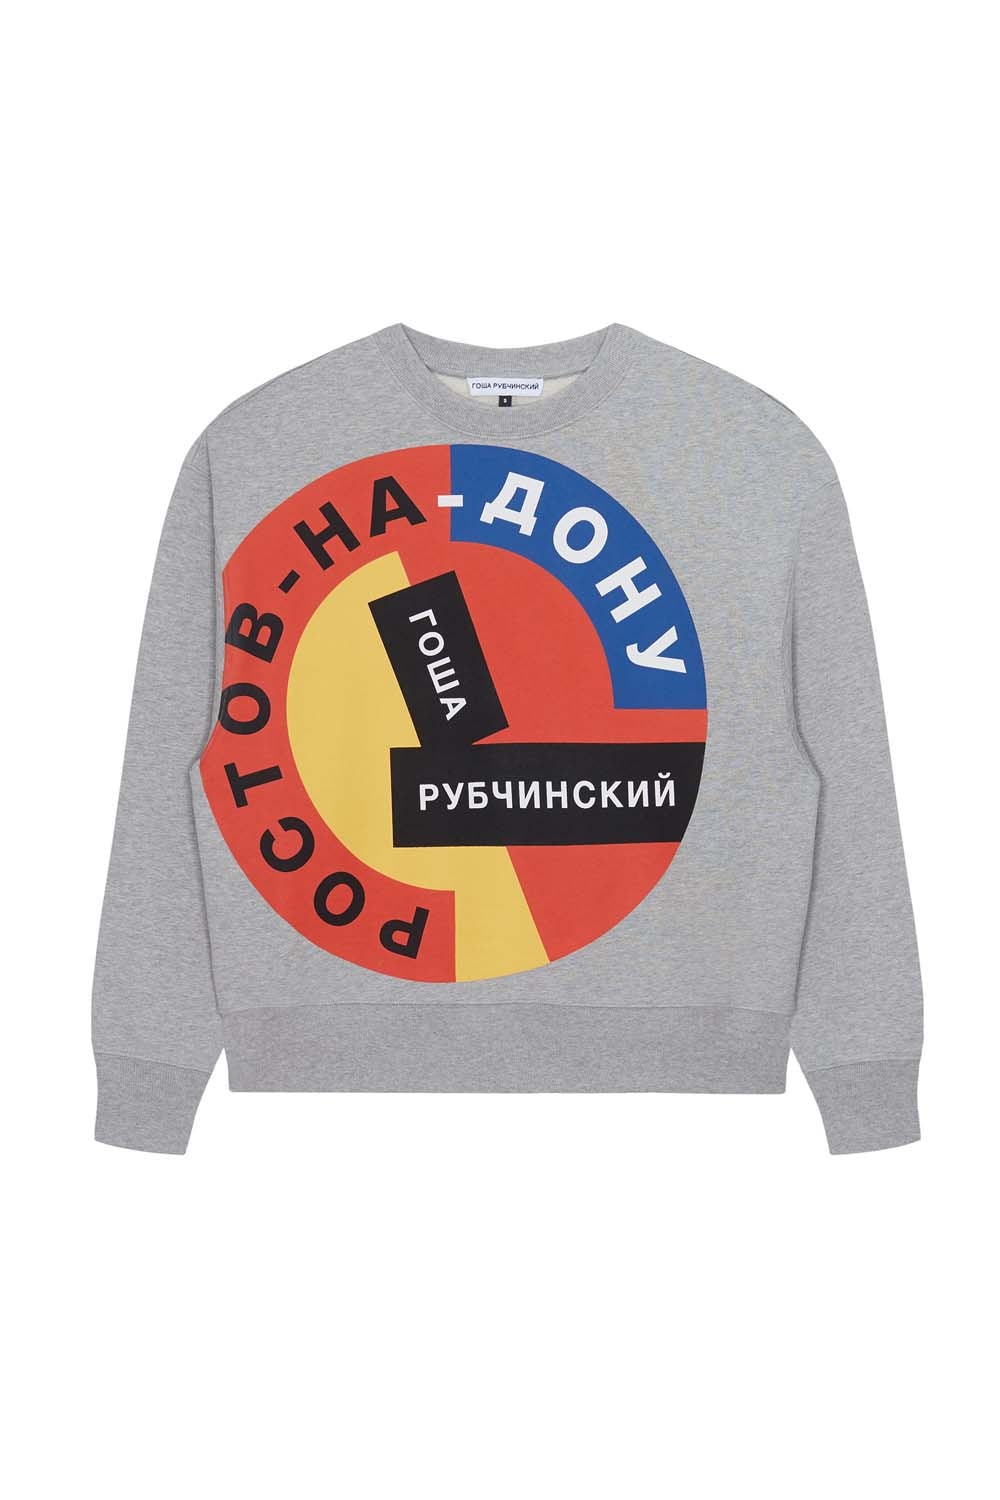 adidas Gosha Rubchinskiy